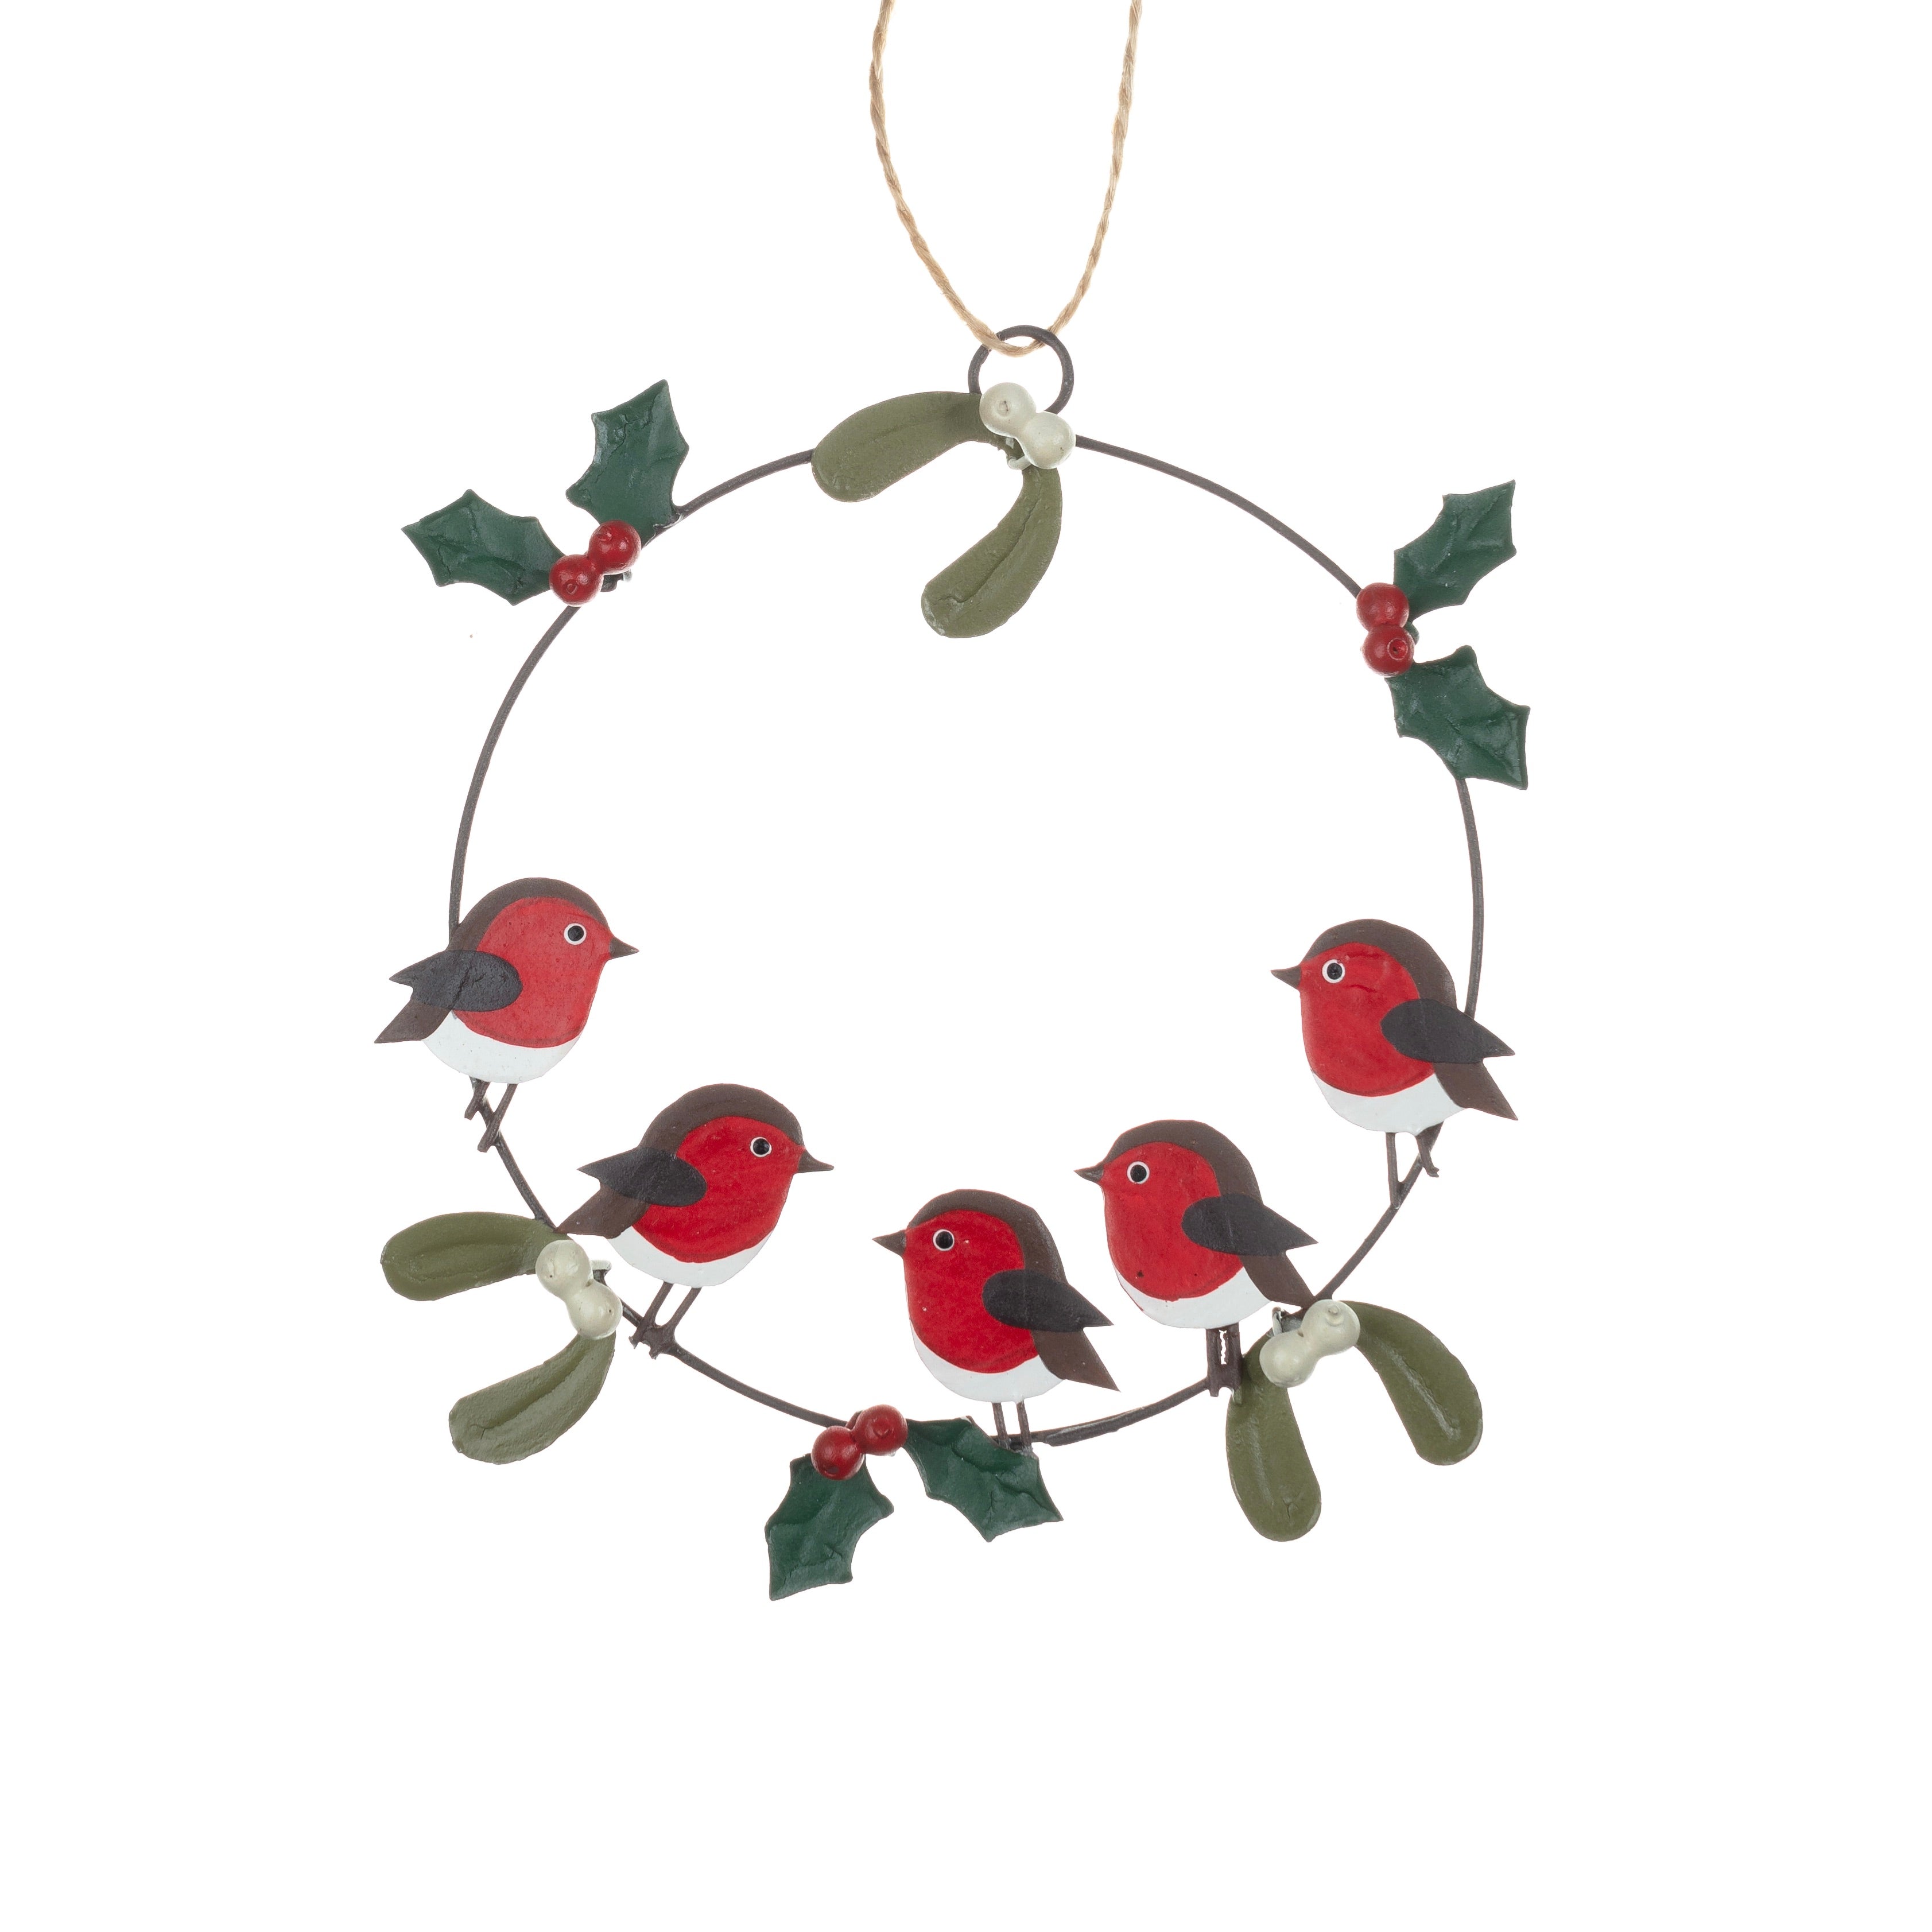 Robin Ring - The Nancy Smillie Shop - Art, Jewellery & Designer Gifts Glasgow